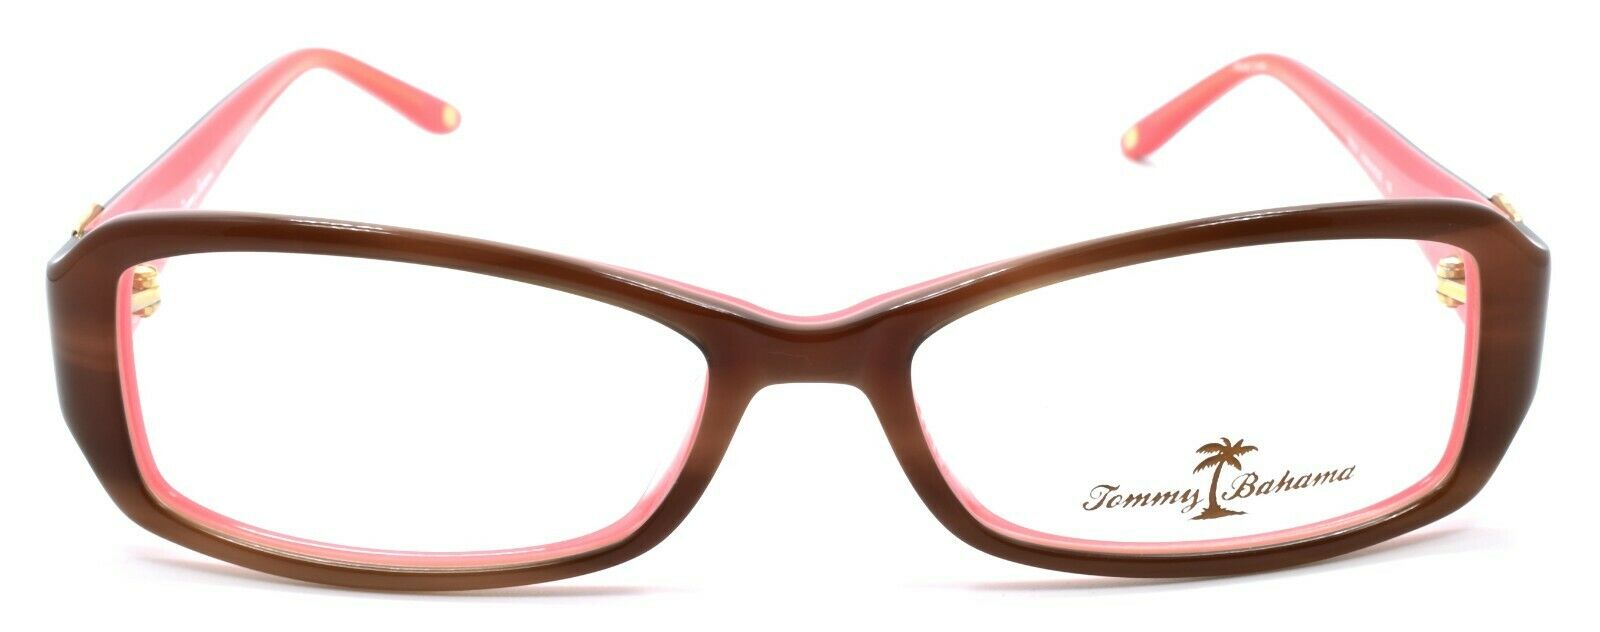 2-Tommy Bahama TB5004 002 Women's Eyeglasses Frames 51-16-135 Havana / Rose-788678509536-IKSpecs